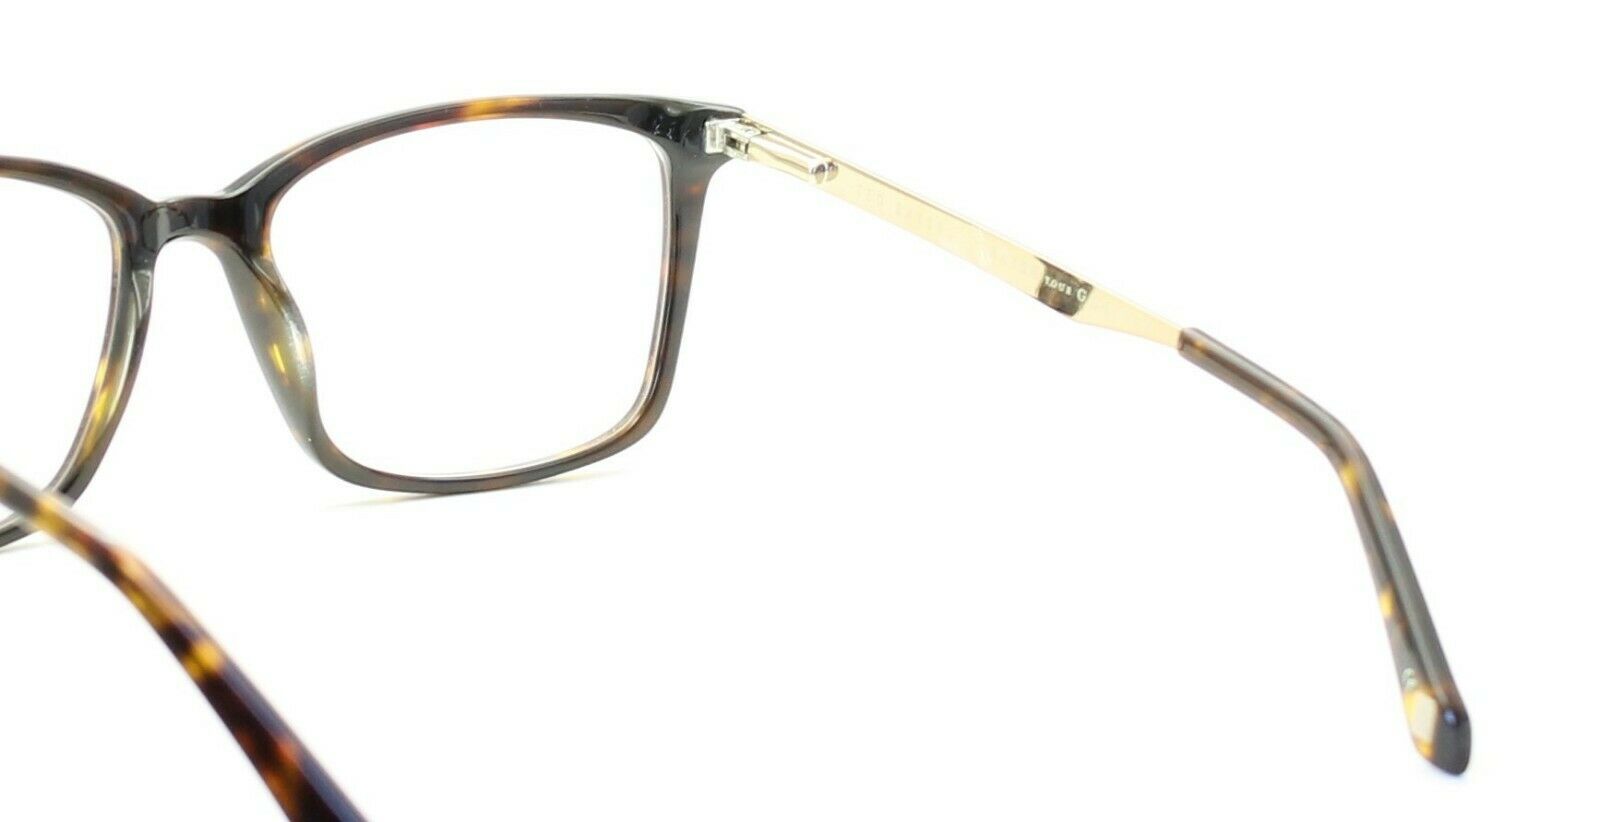 TED BAKER Corie 8153 145 53mm FRAMES Glasses Eyeglasses RX Optical Eyewear - New